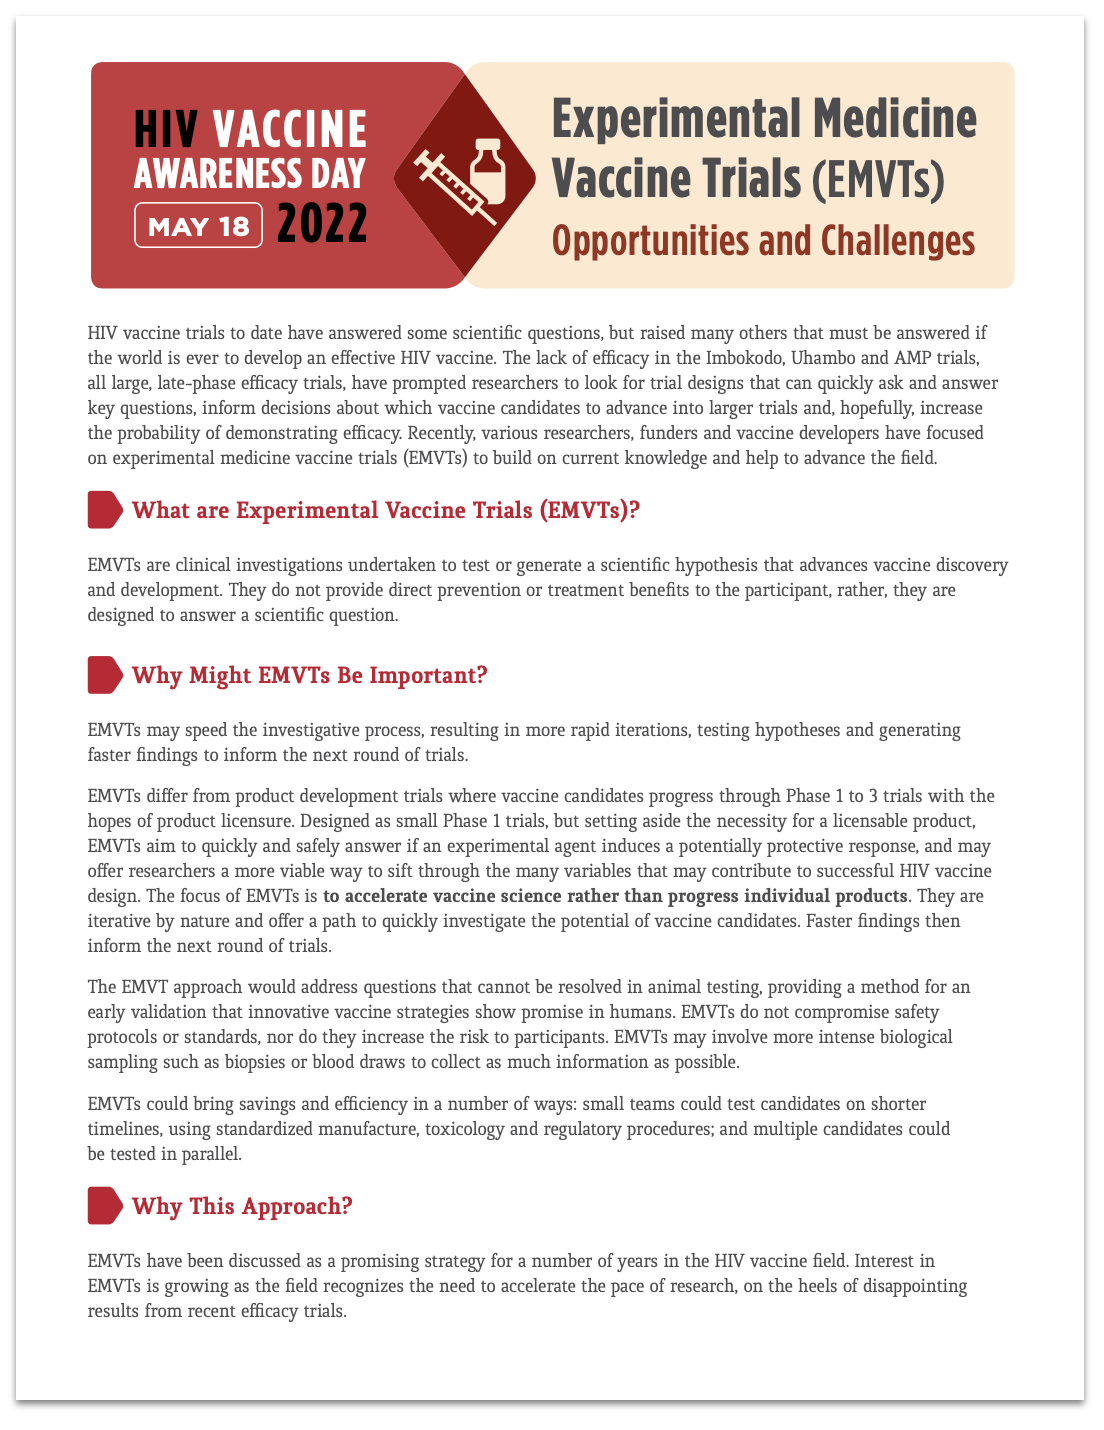 Experimental Medicine Vaccine Trials document thumbnail